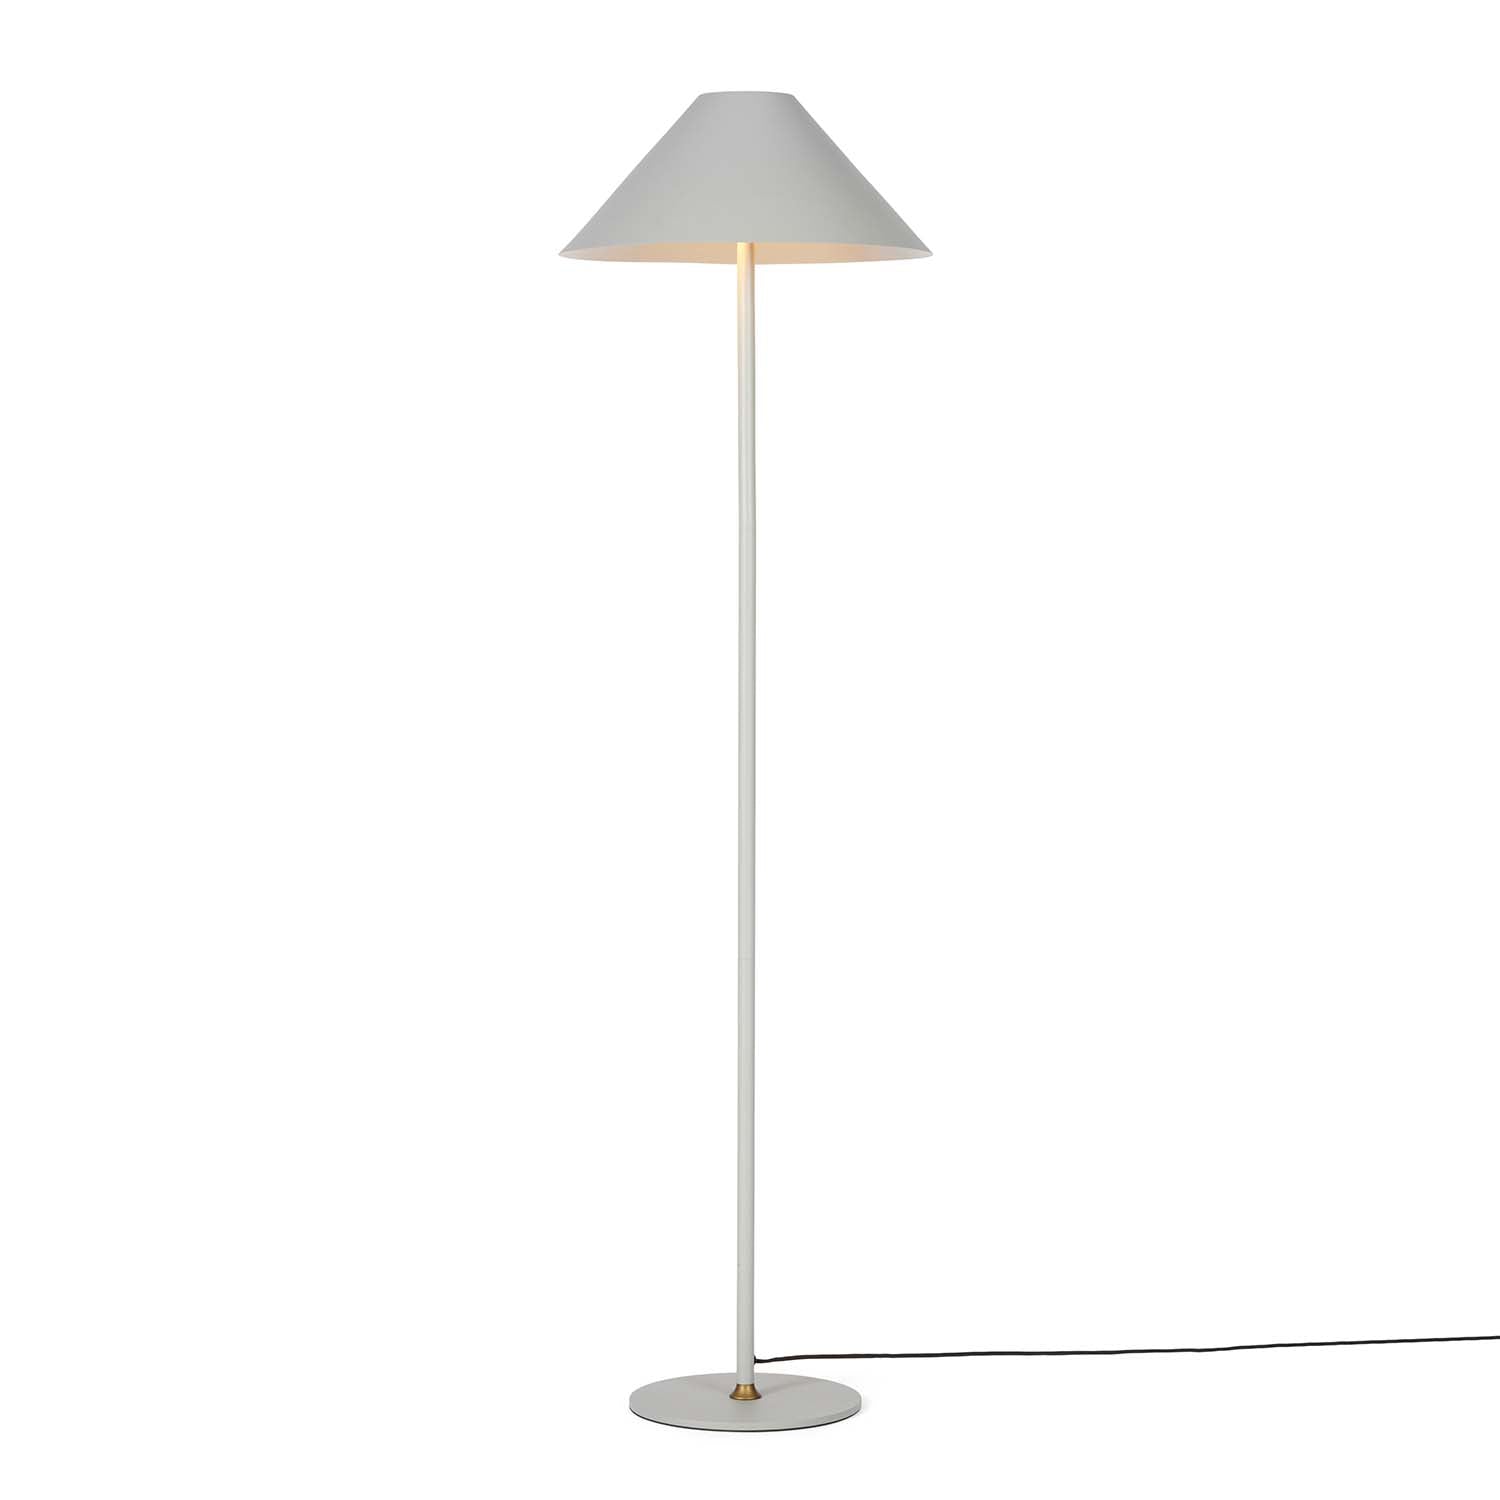 HYGGE - Vintage conical design floor lamp